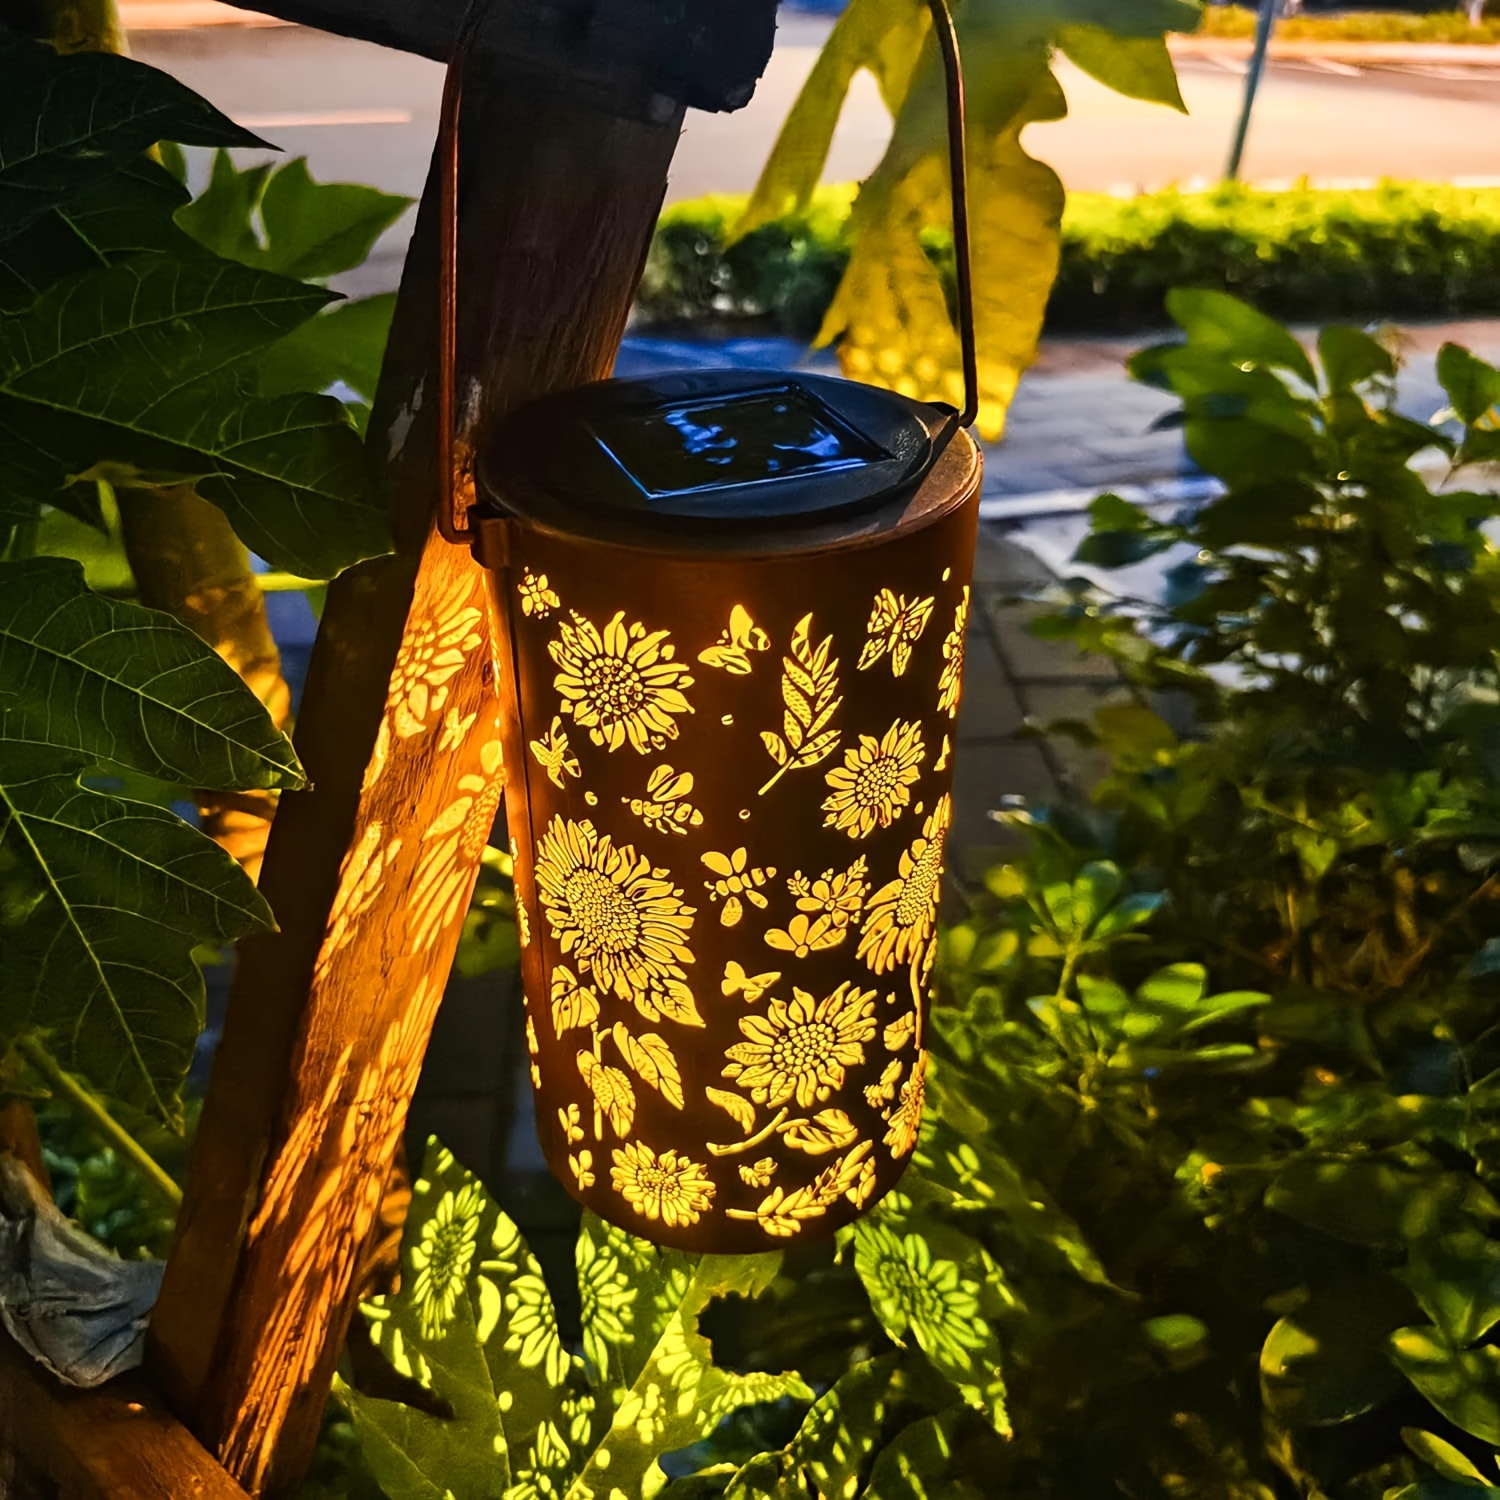 

Waterproof Solar Sunflower Lantern - Led Outdoor Hanging Light For Garden, Patio, Lawn & Pathway Decor, Golden Metal Solar Garden Decor Solar Lights Outdoor Waterproof